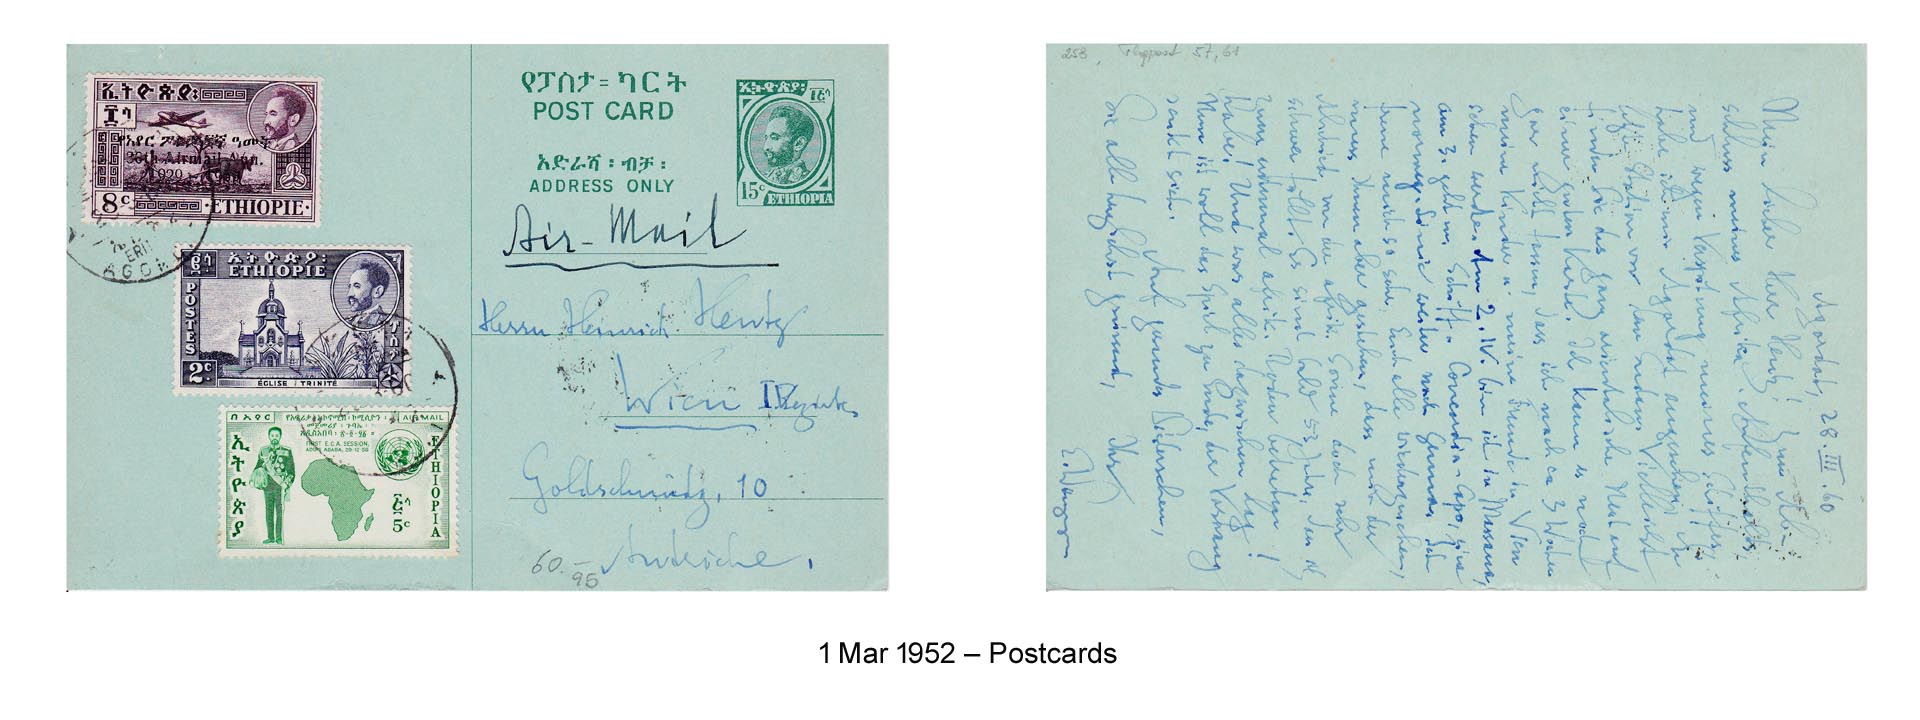 19520301 – Postcards